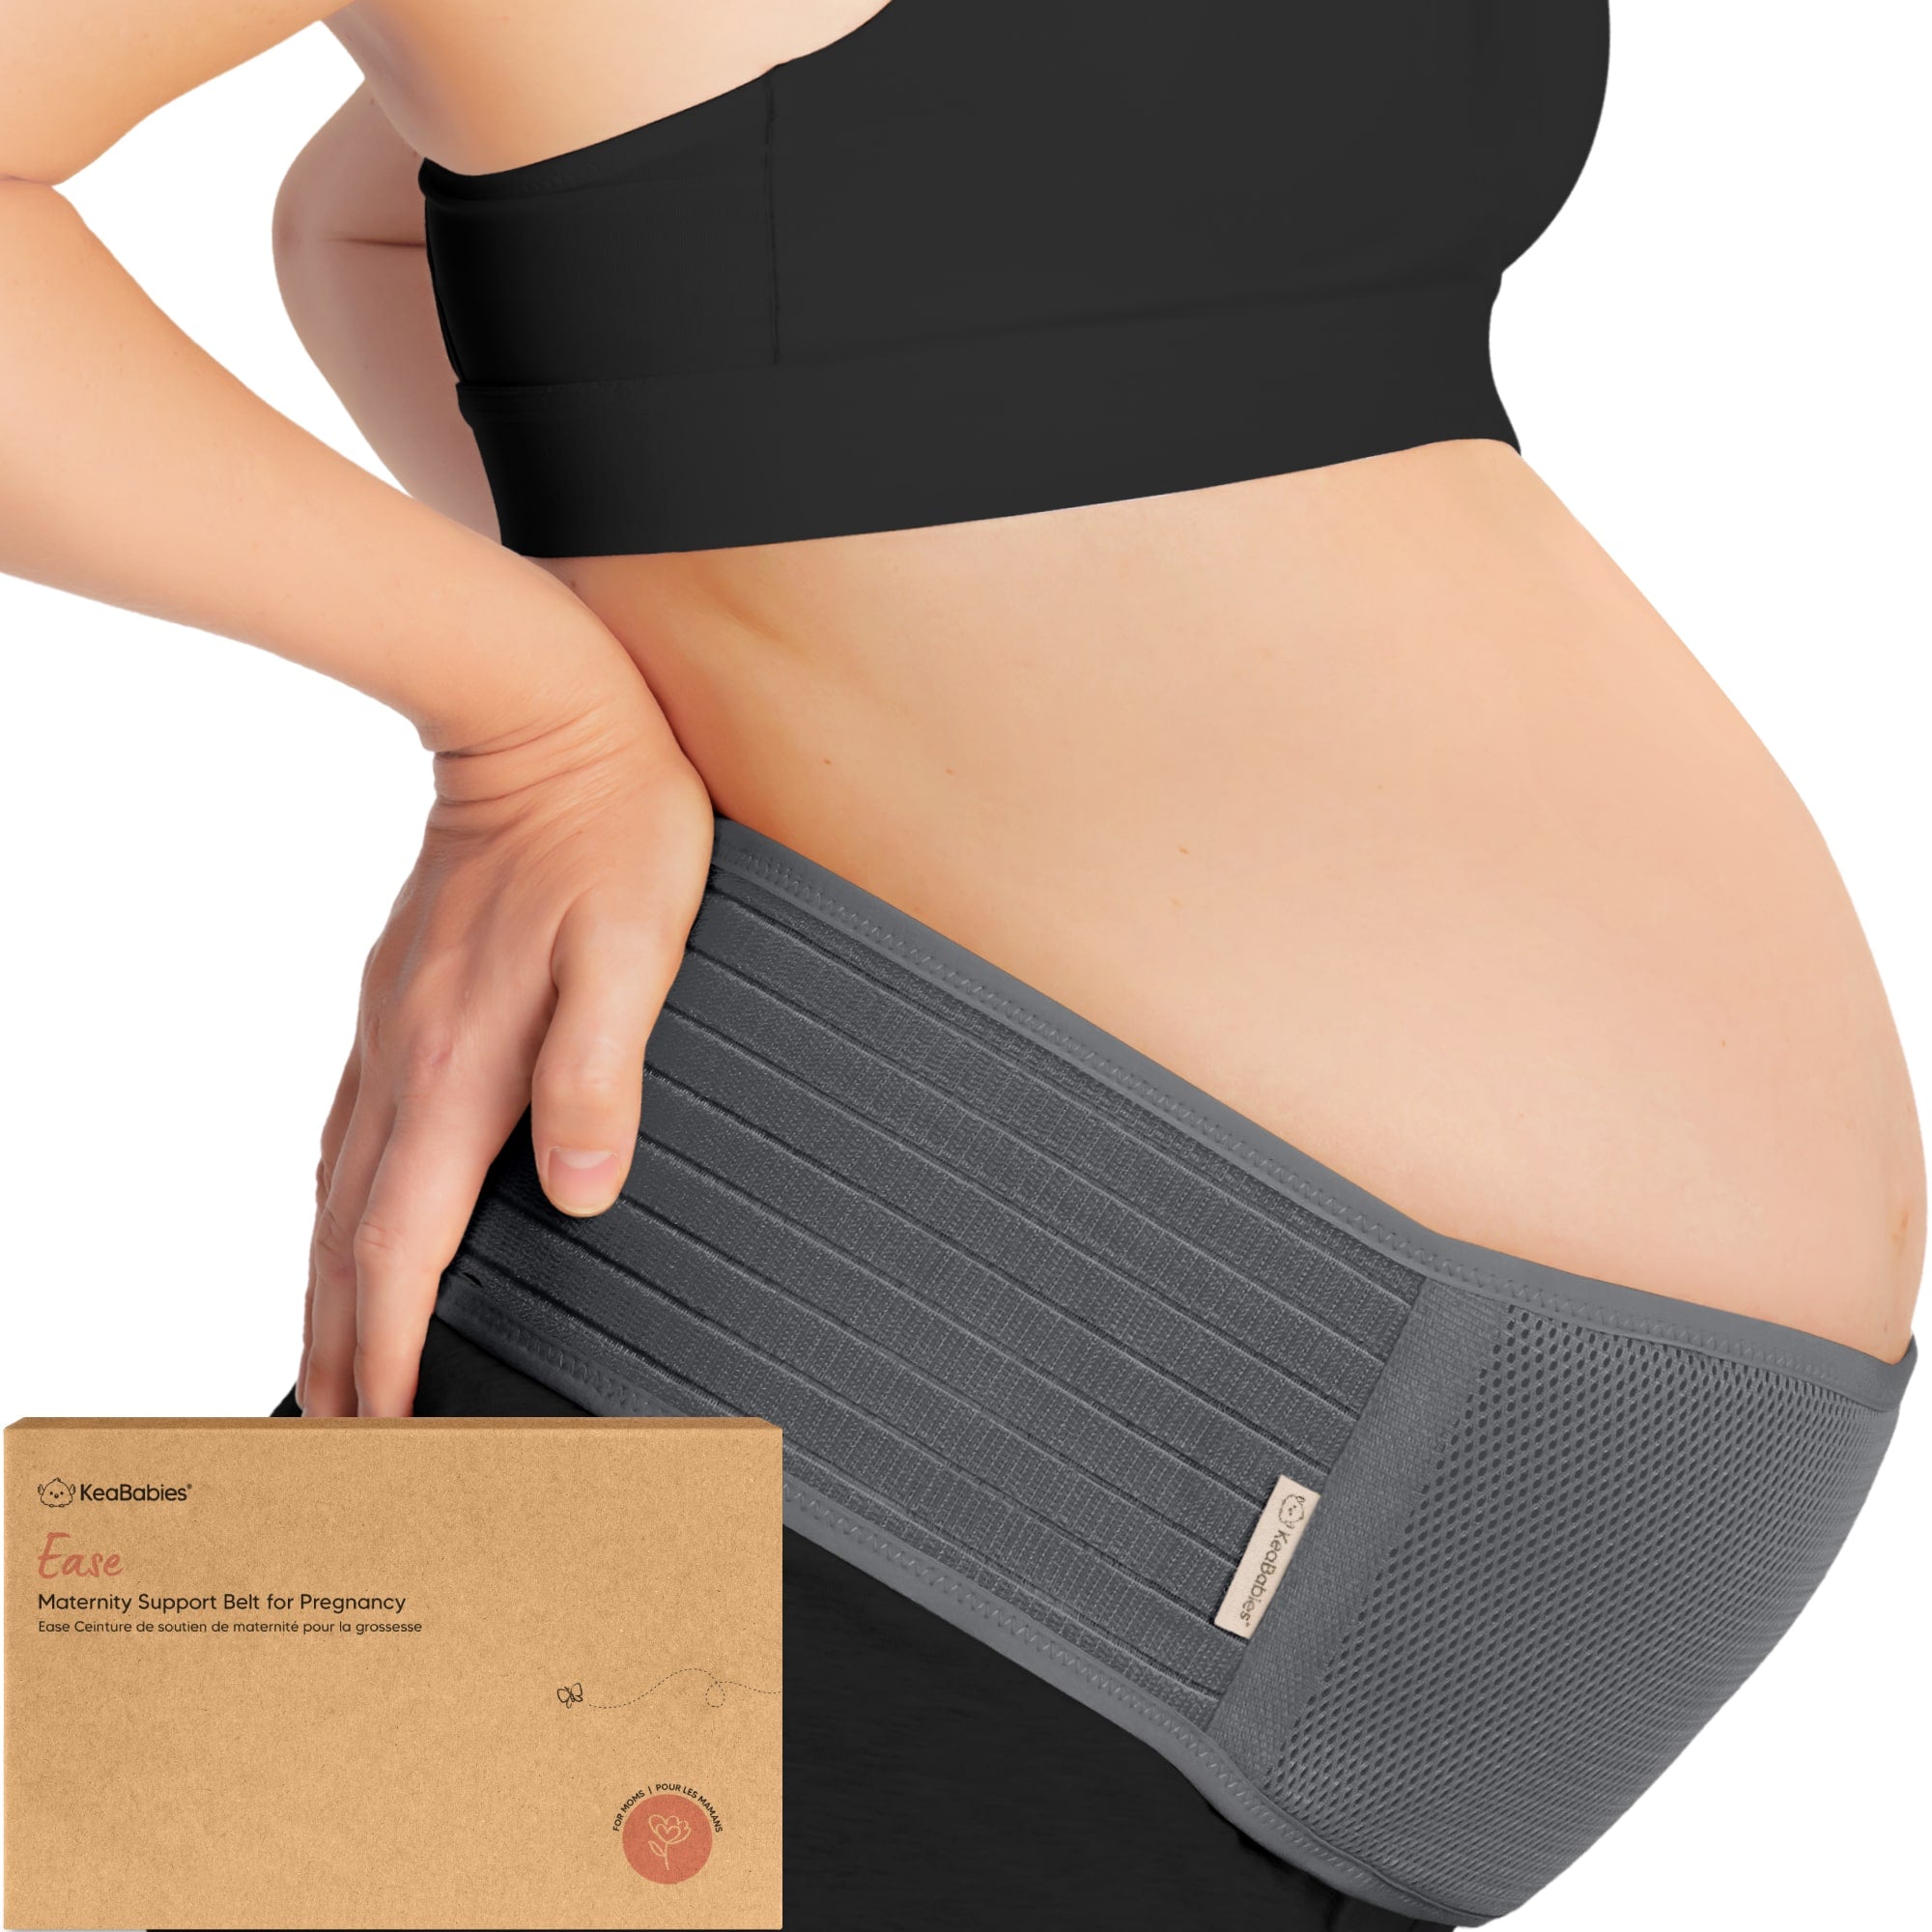 Best Pelvic Support Belt For Pregnancy: The V Sling